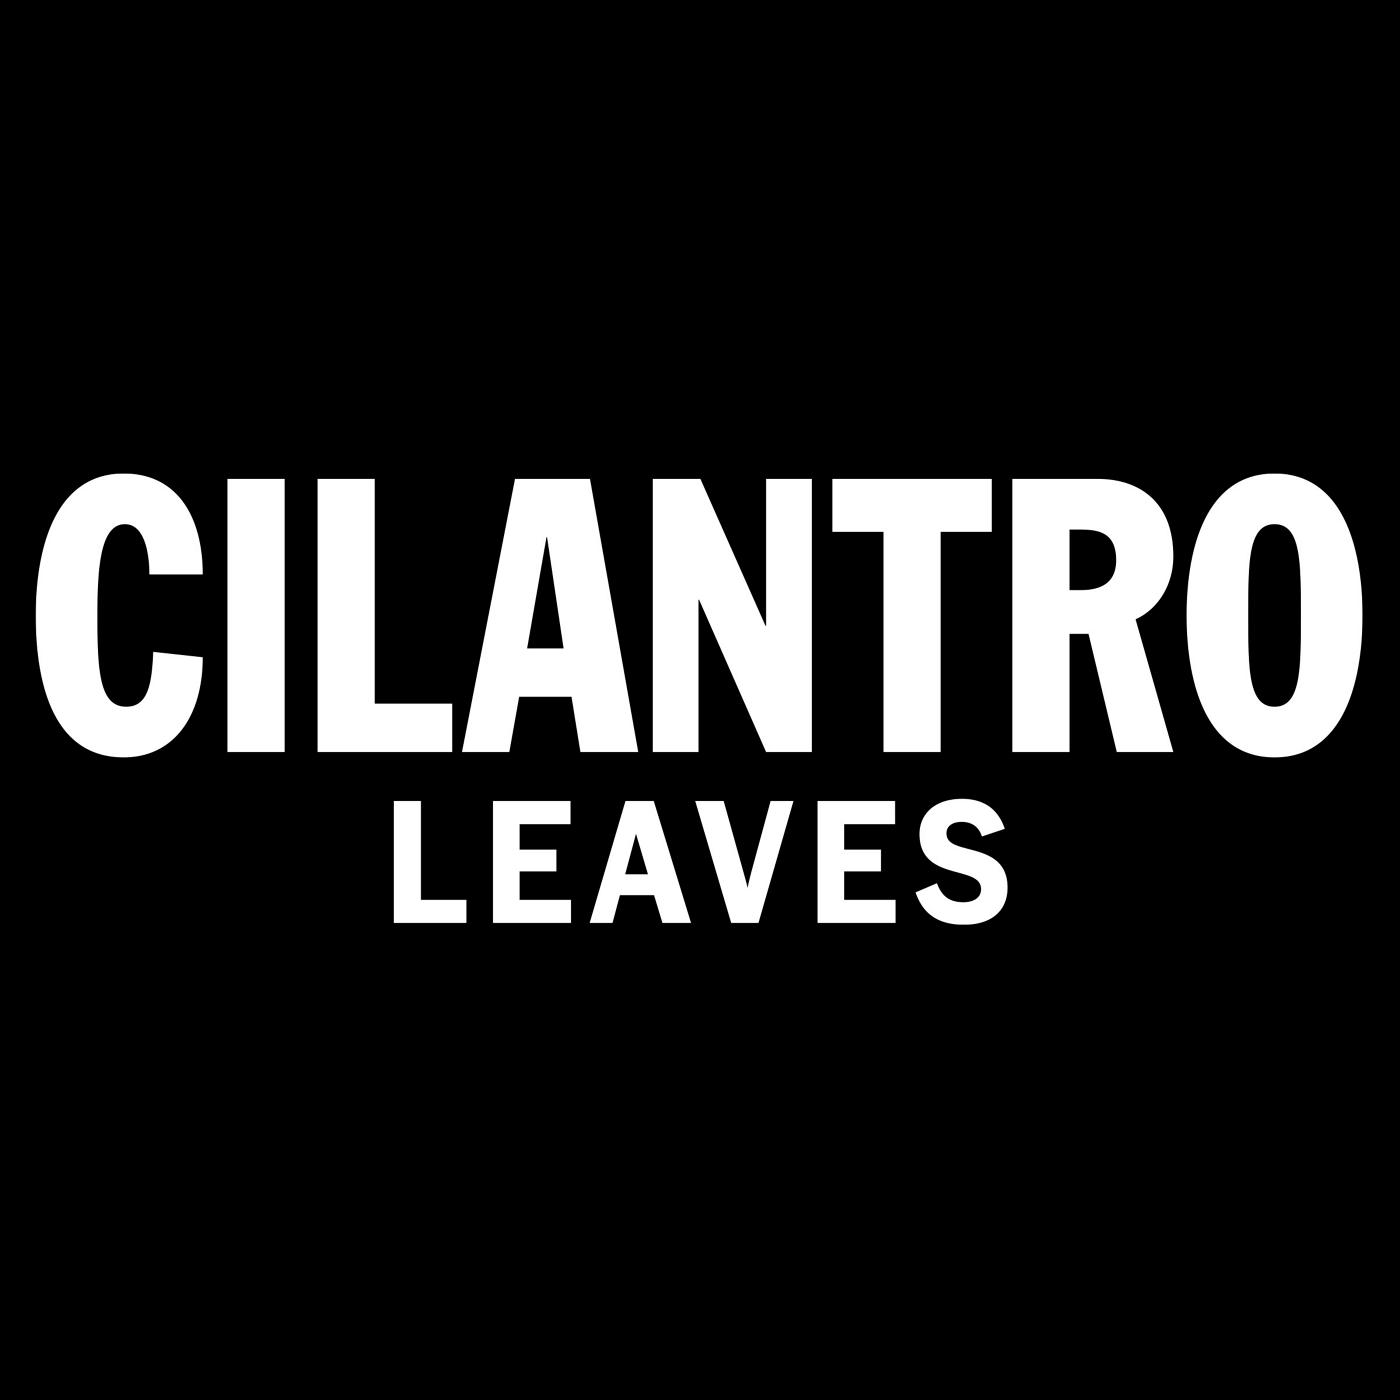 McCormick Cilantro Leaves; image 6 of 6